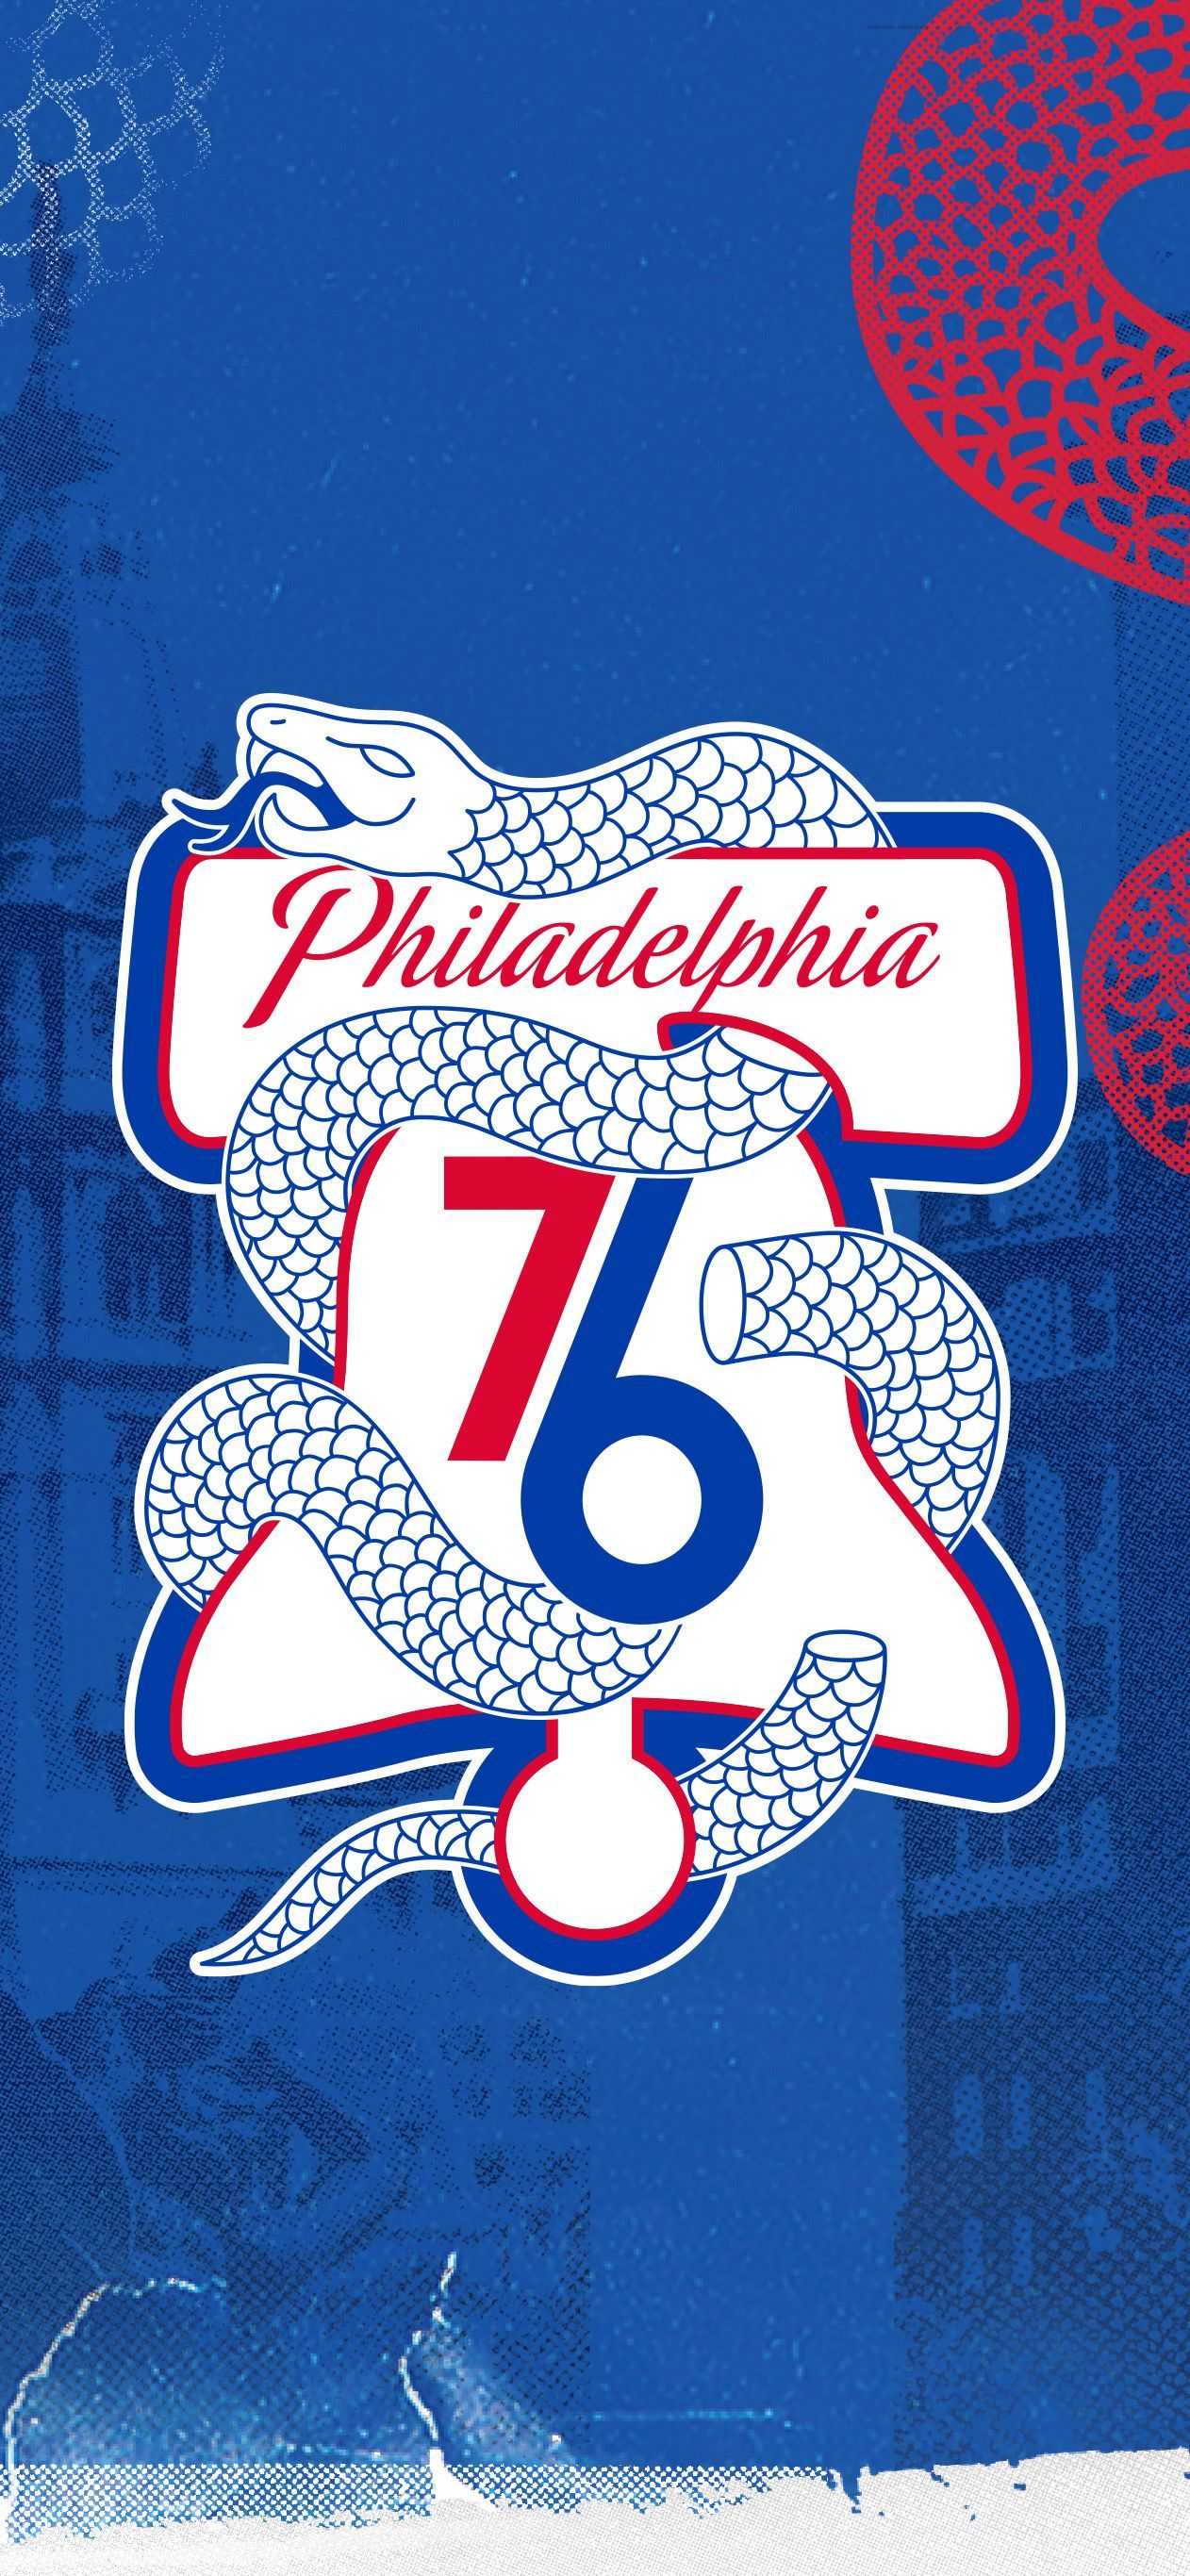 Philadelphia 76ers Sixers Wallpaper. Philadelphia 76ers, Team wallpaper, 76ers